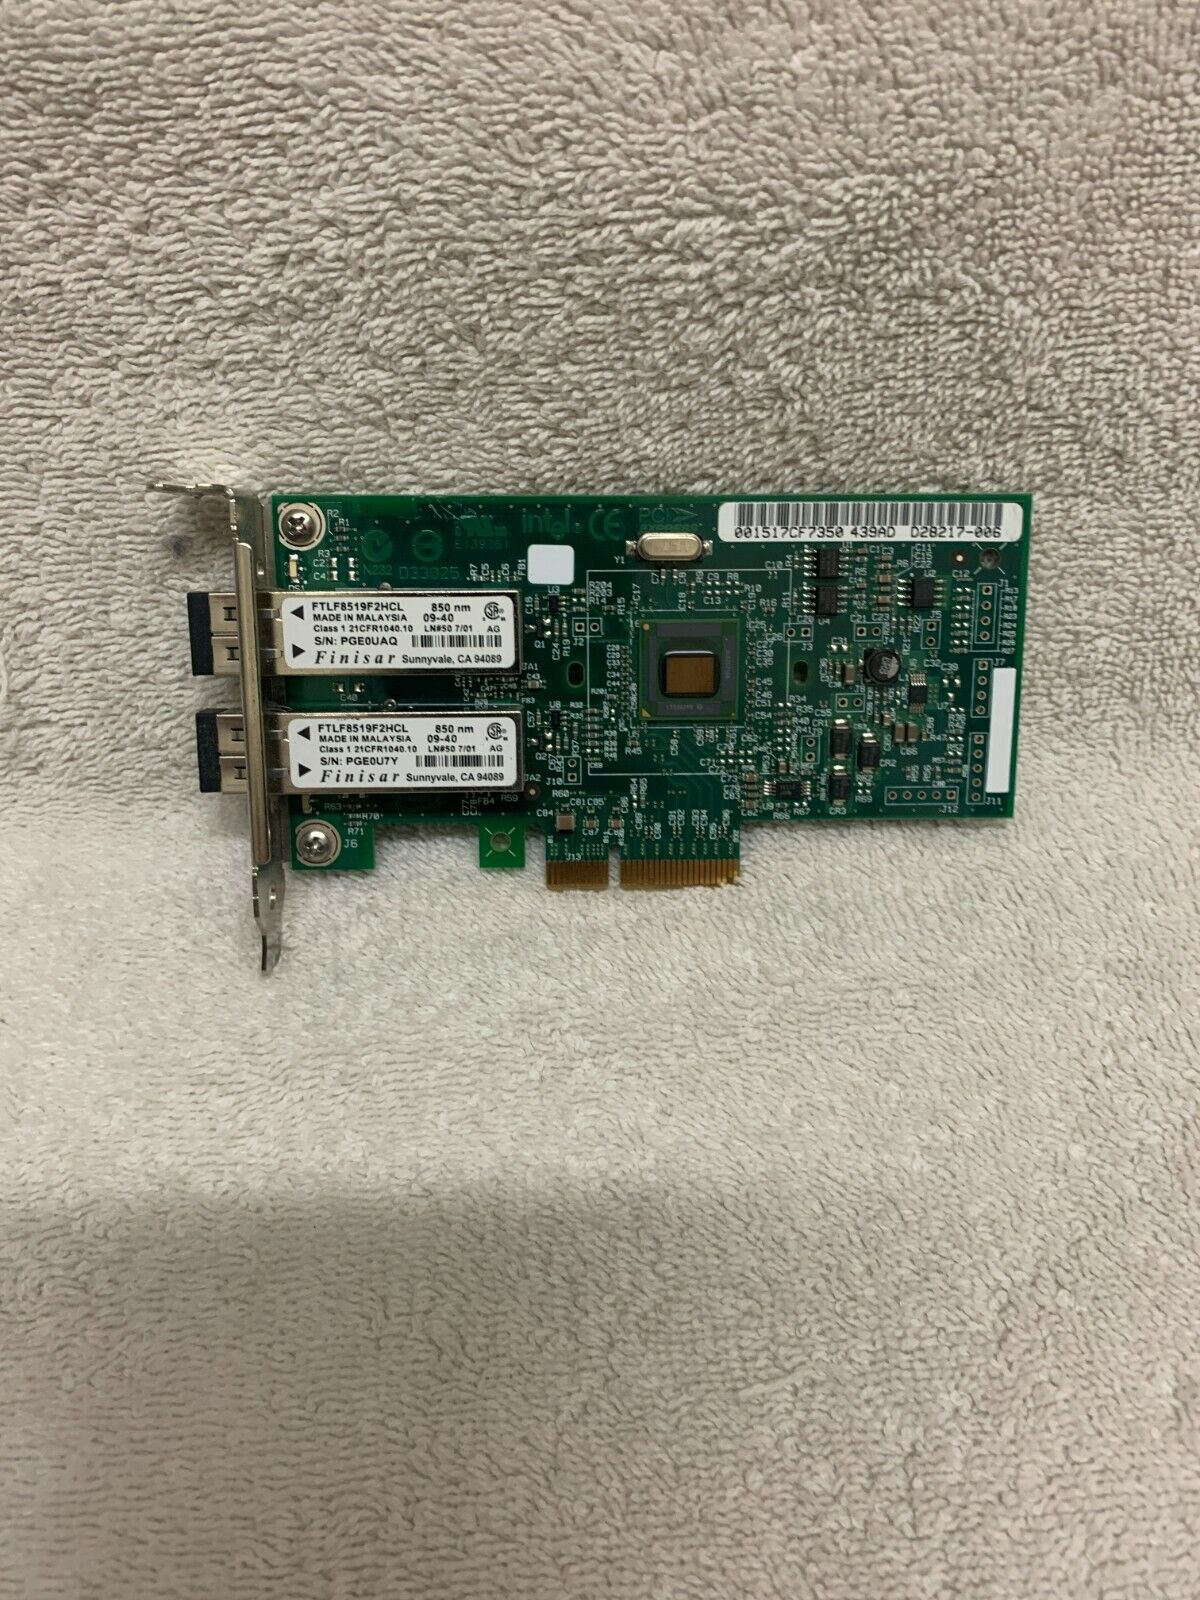 Sun Intel Dual Port Gigabit Ethernet Adapter 371-0904-03 D28217-005 Low Profile